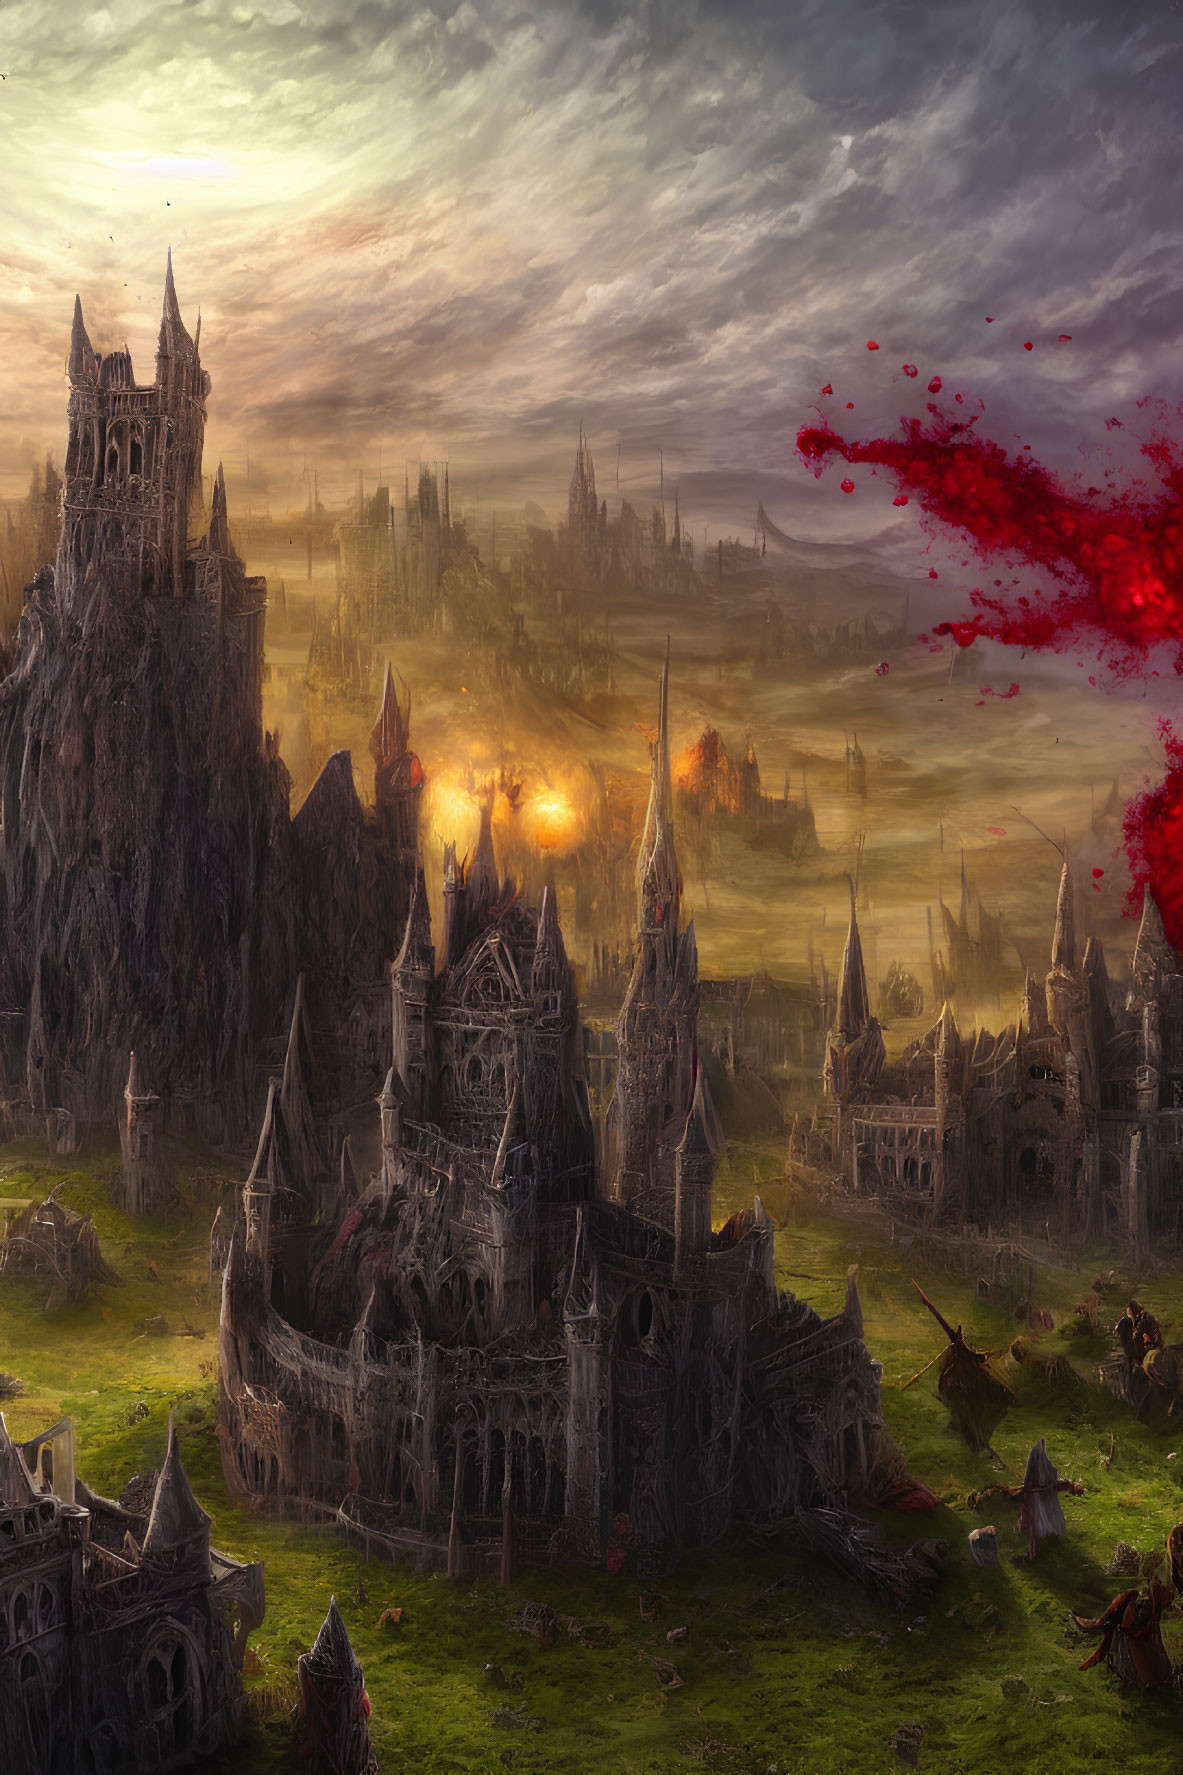 Gothic castle in battle-scarred landscape under ominous sky